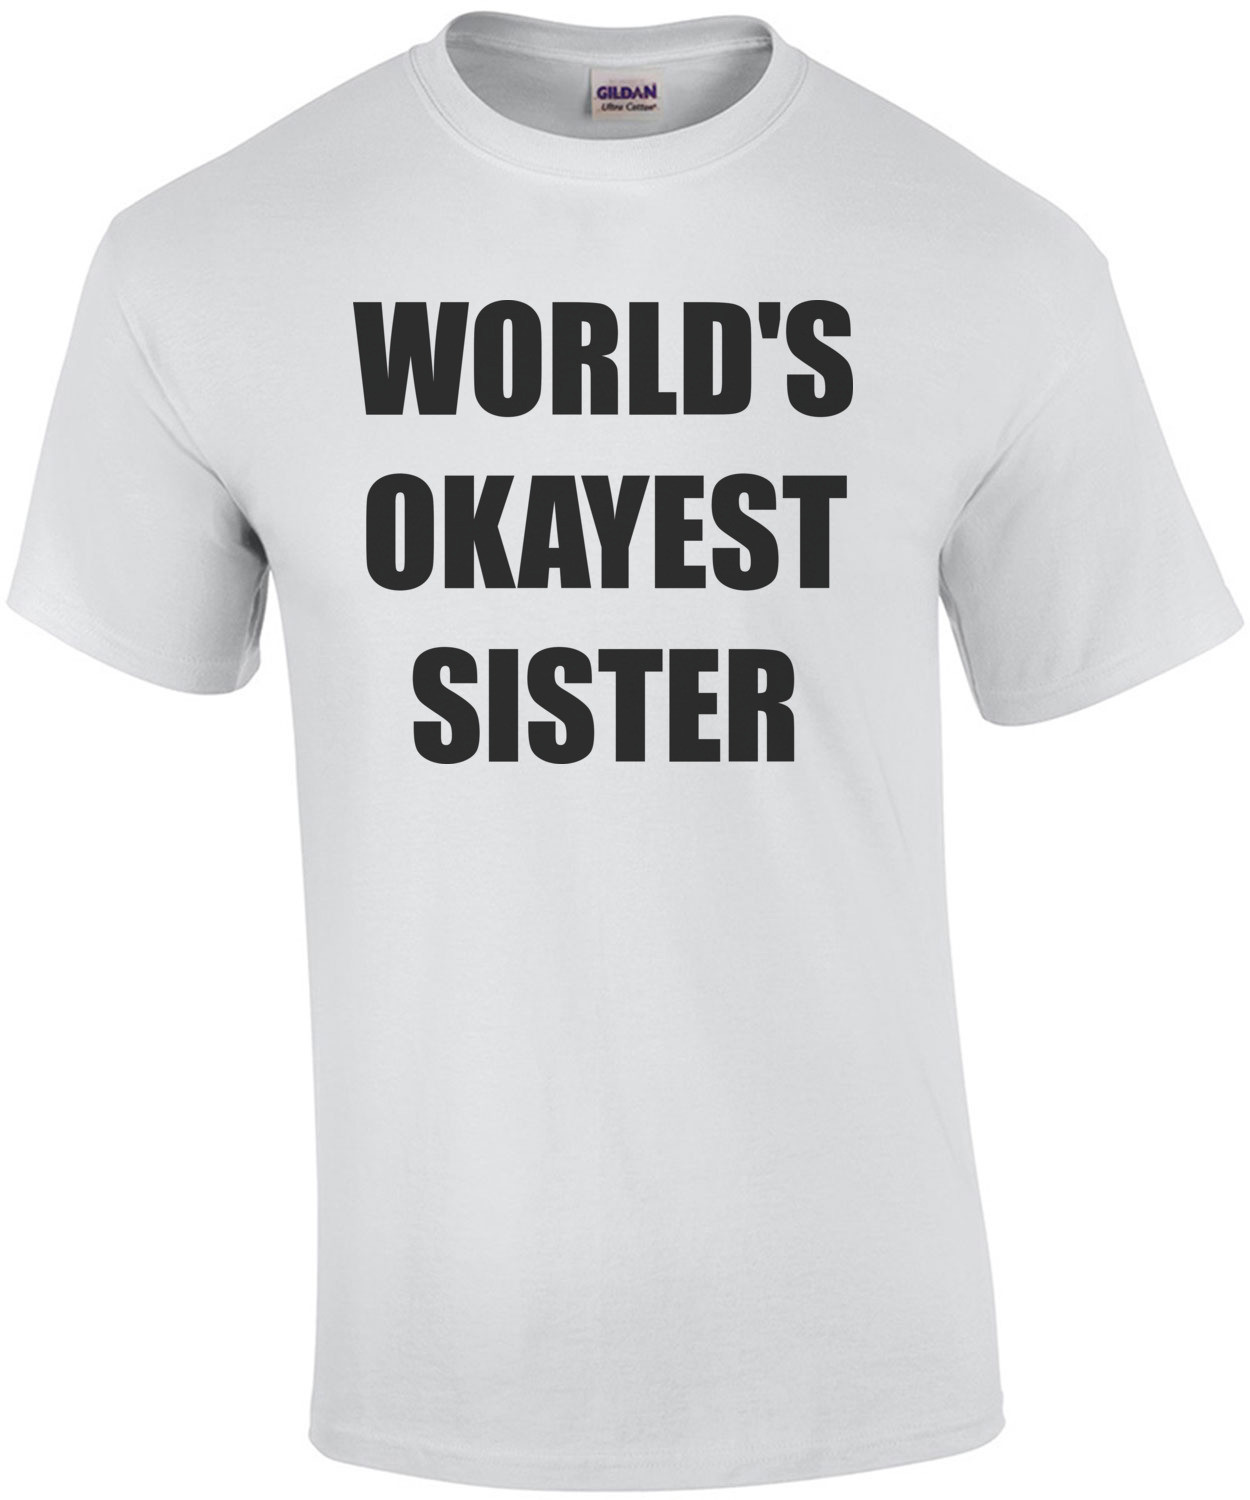 WORLD'S OKAYEST SISTER